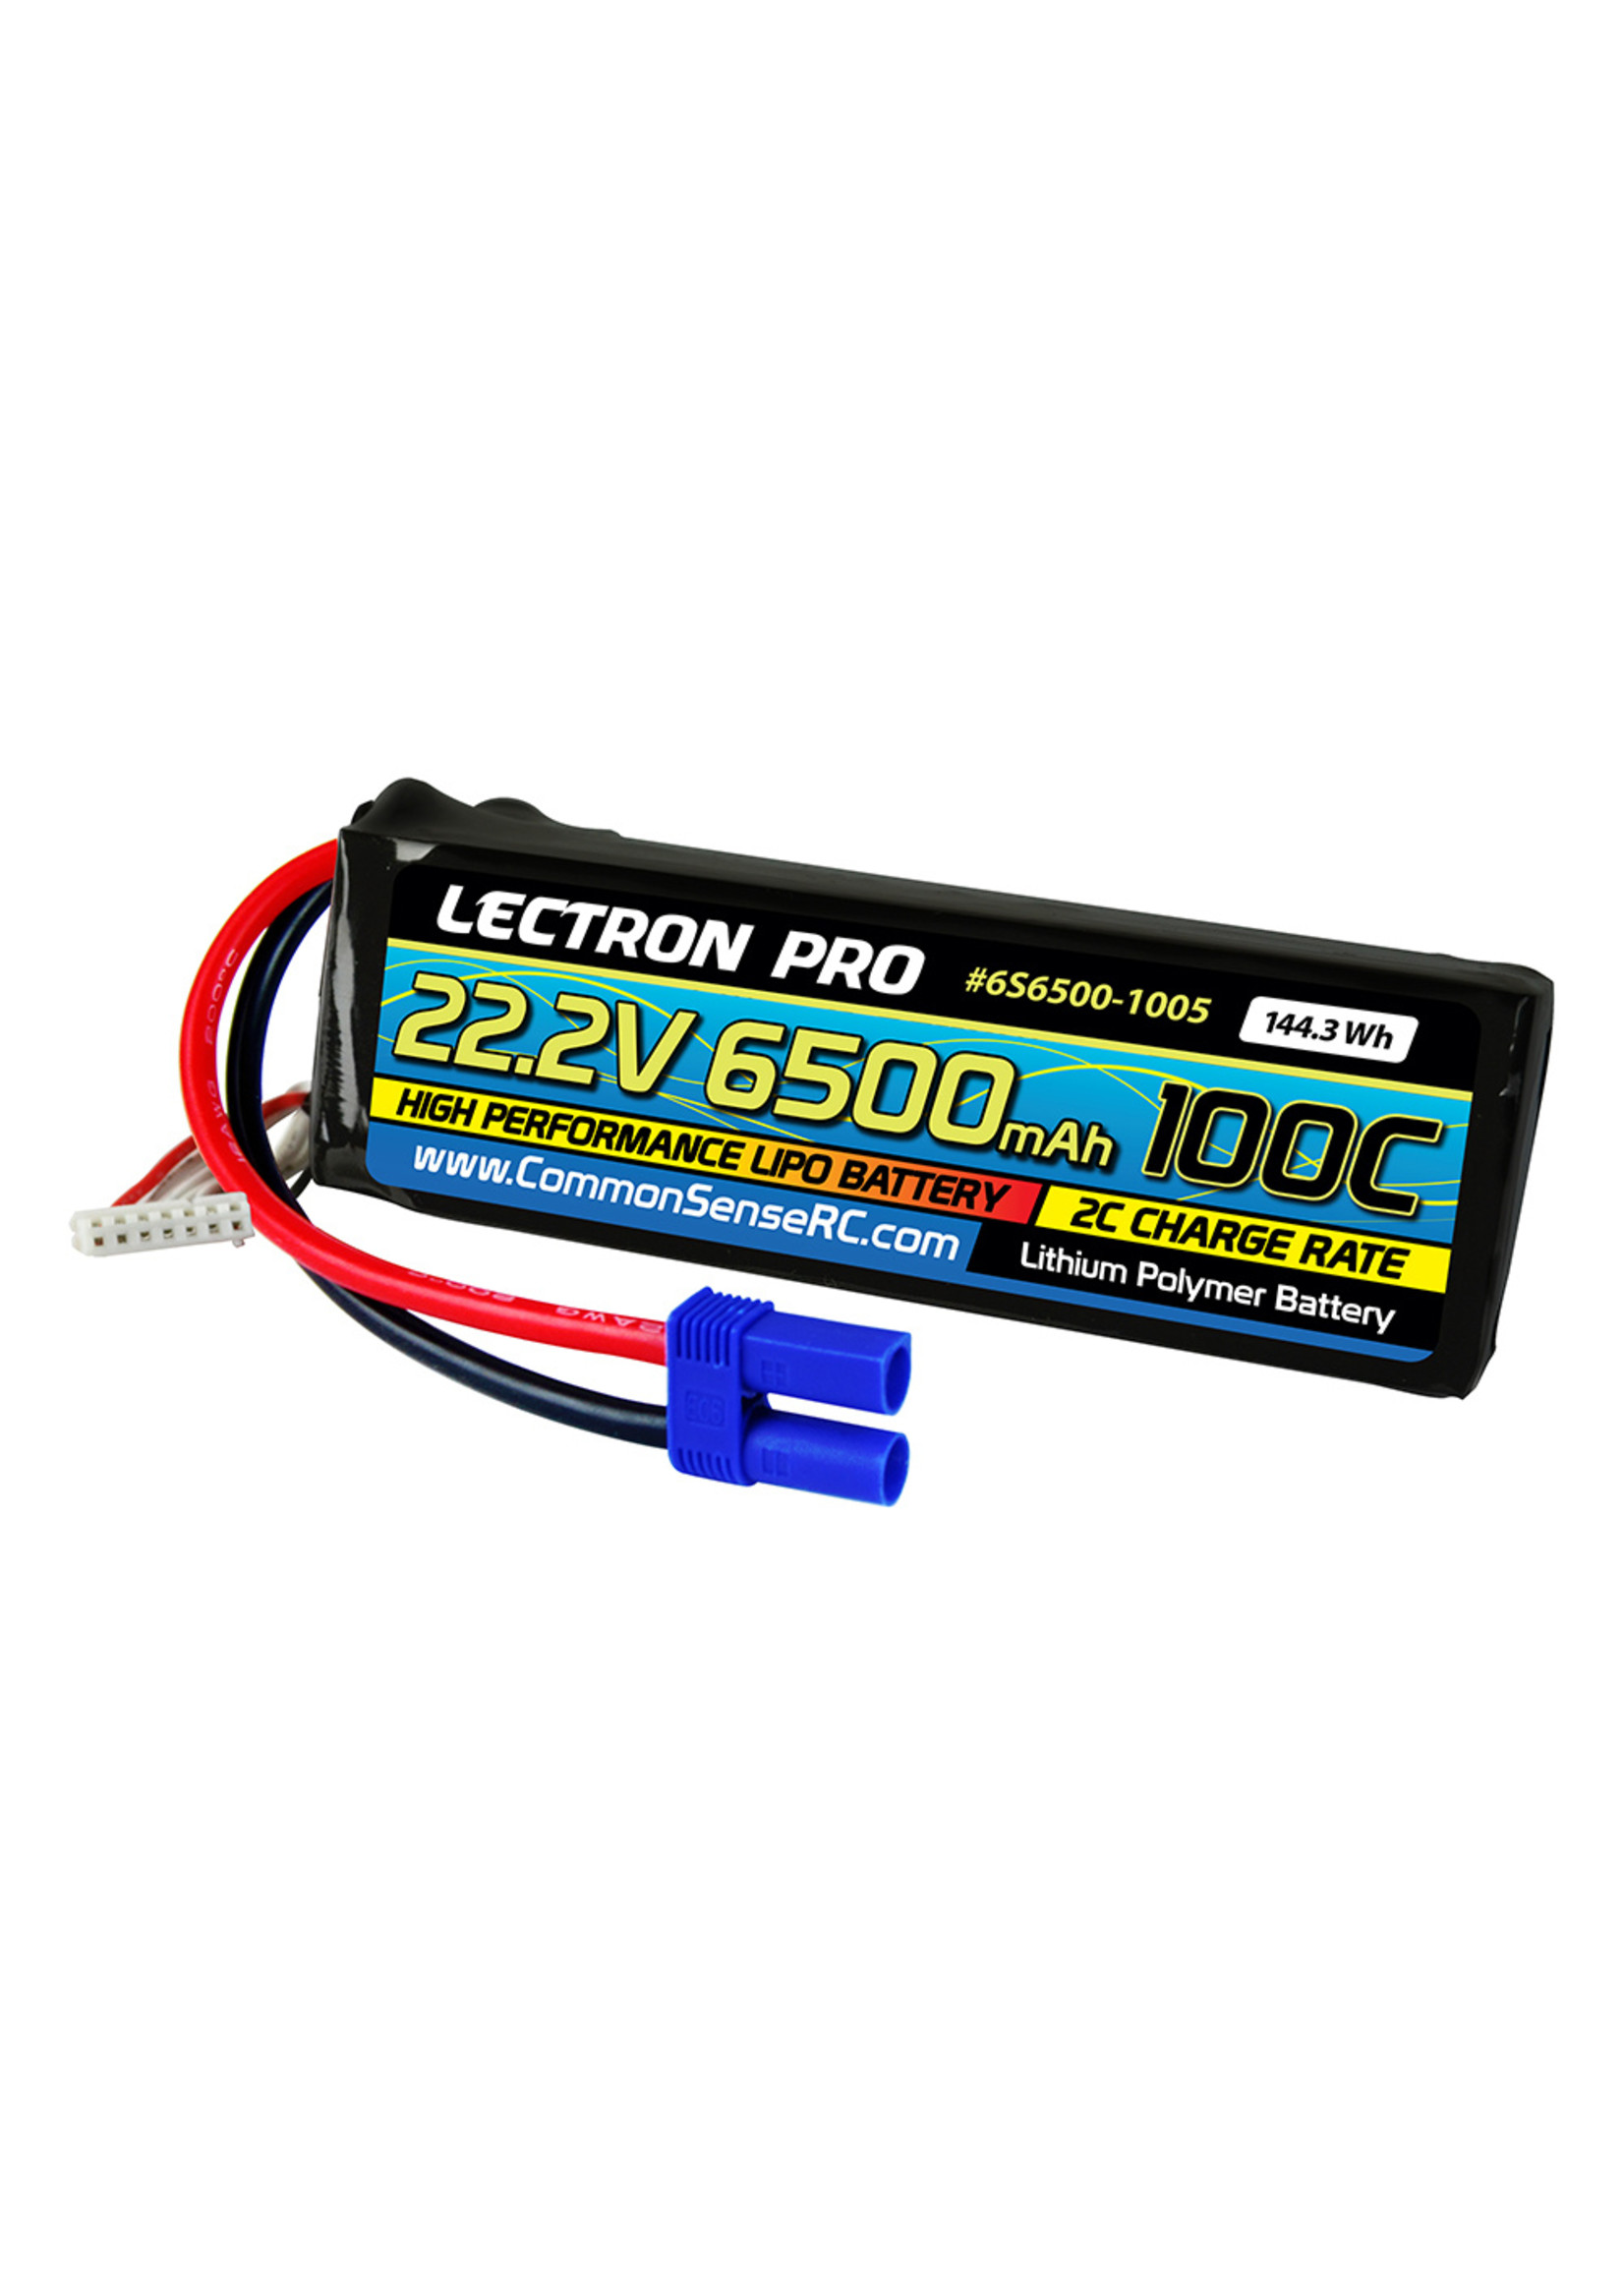 Common Sense RC 6S6500-1005 - 22.2V 6500mAh 100C Lipo Battery with EC5 Connector